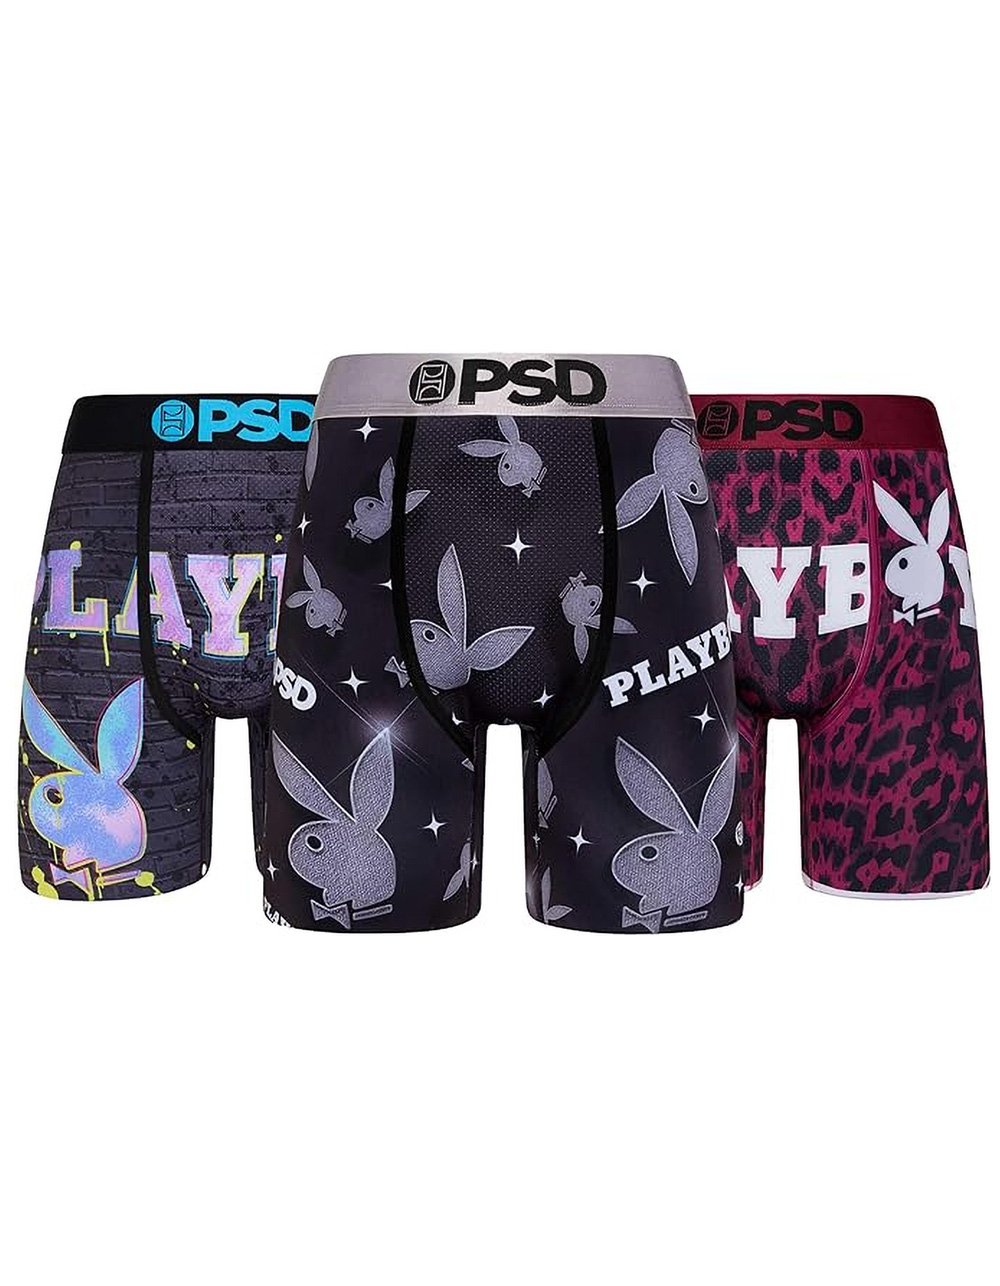 Newest Playboy Mens Underwear L - Playboy Lowest Price